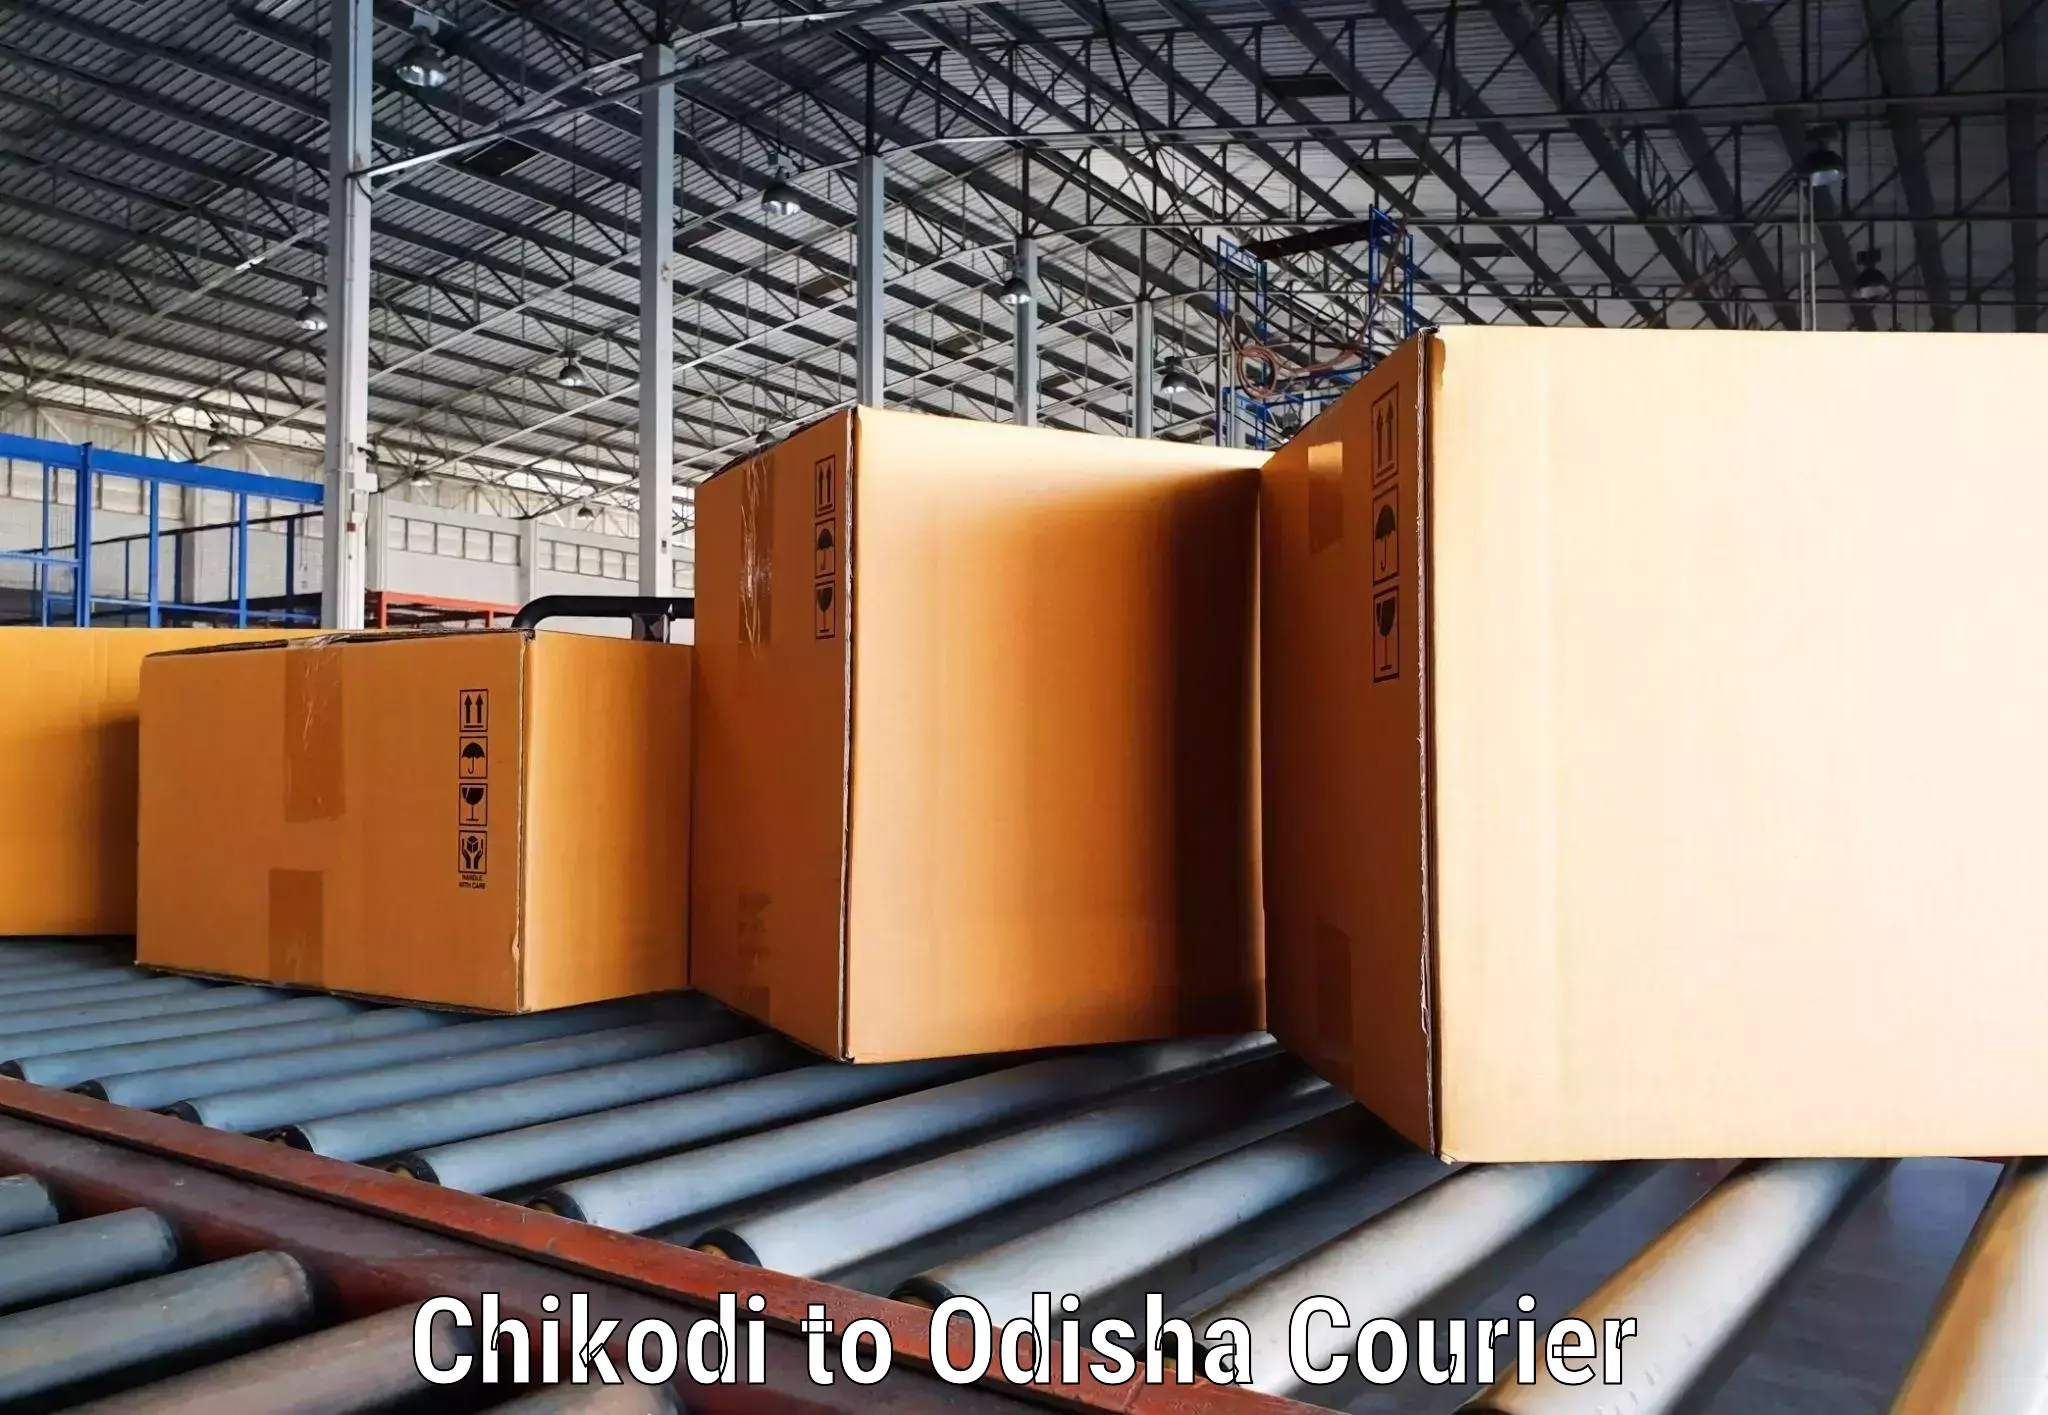 State-of-the-art courier technology Chikodi to Kosagumuda